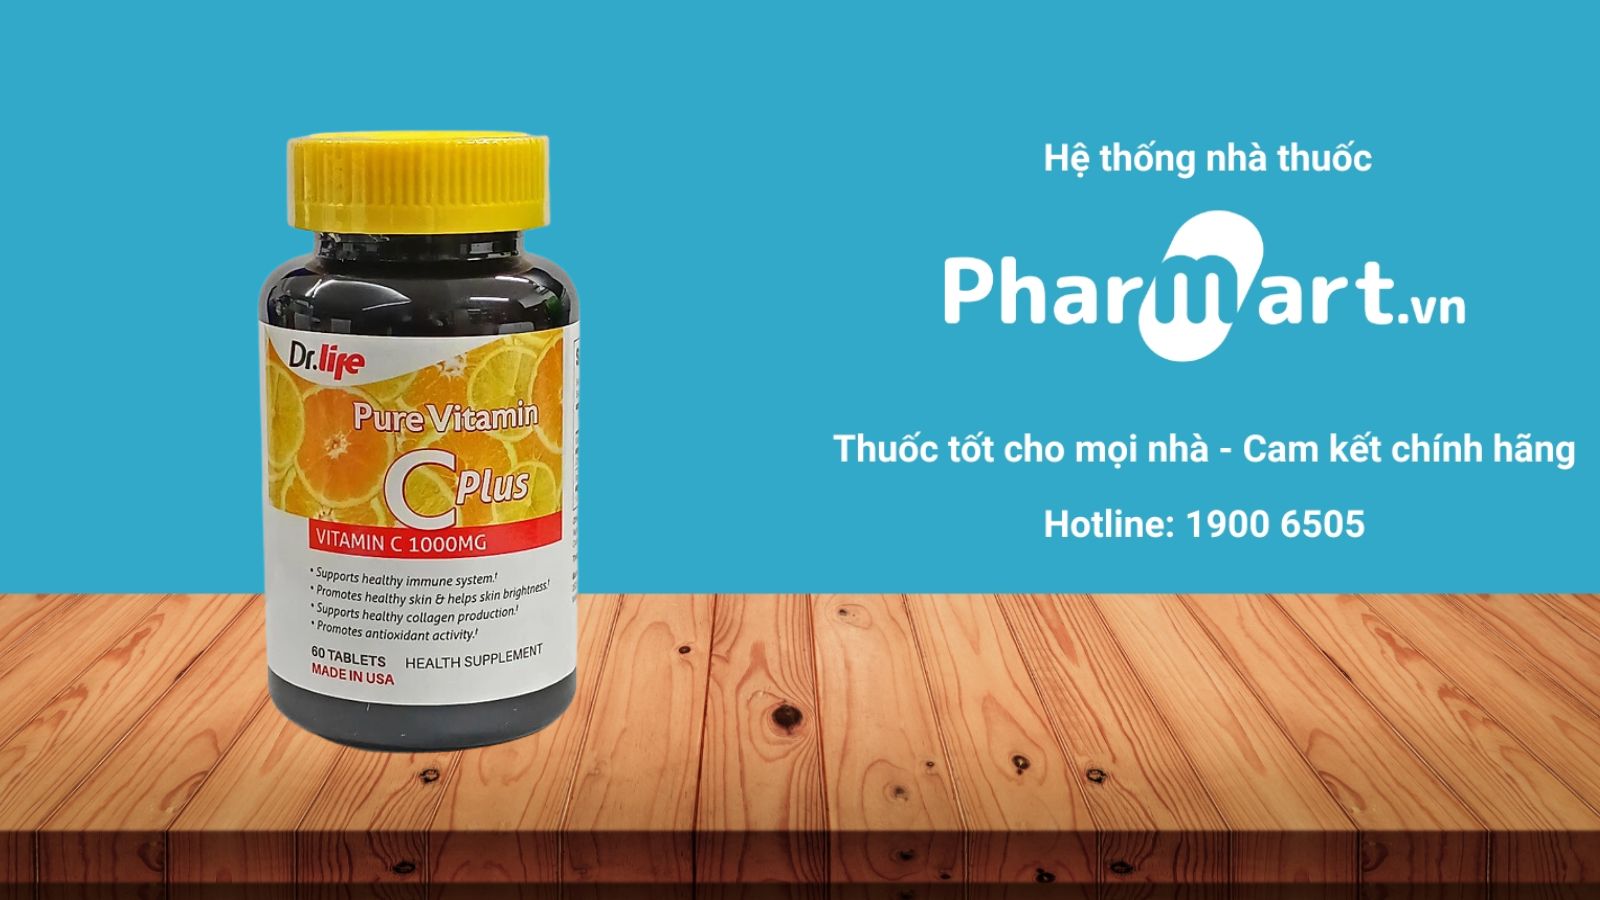 Mua ngay Pure Vitamin C Plus 1000mg tại Pharmart.vn 